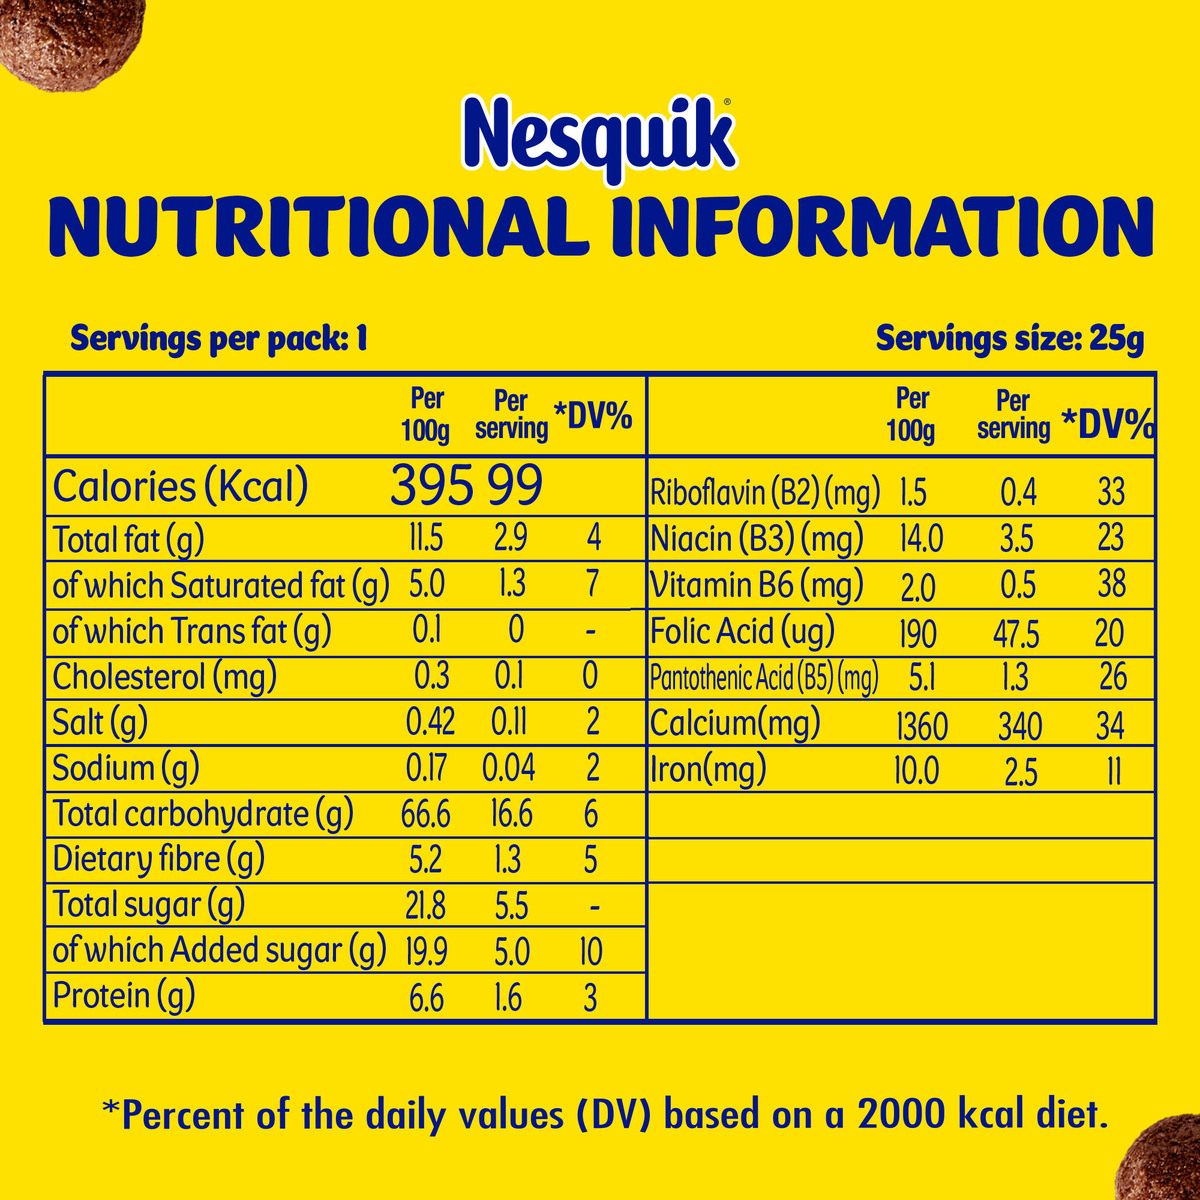 Nestle Nesquik Chocolate Cereal Bar 25 g